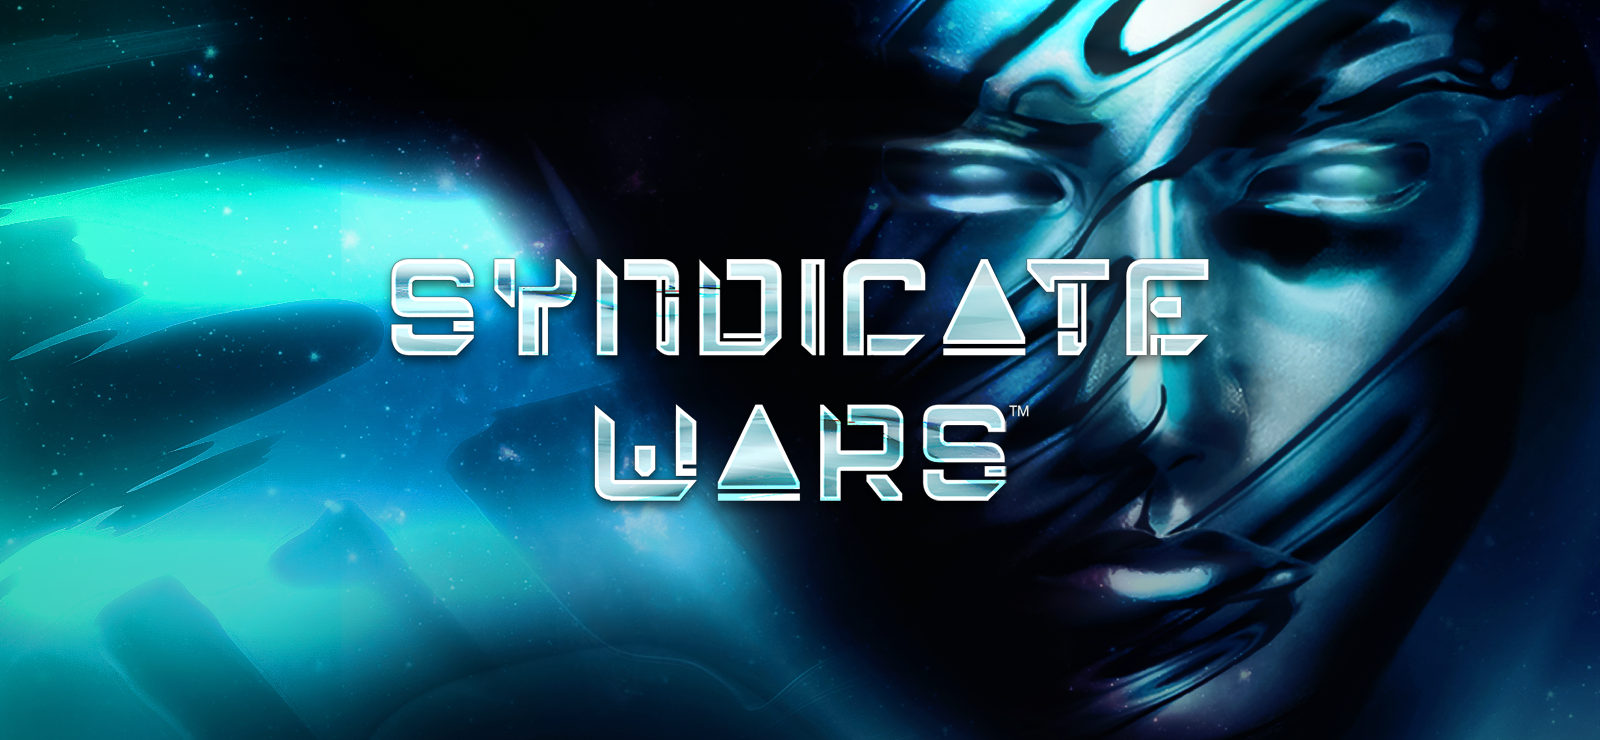 Syndicate Wars™